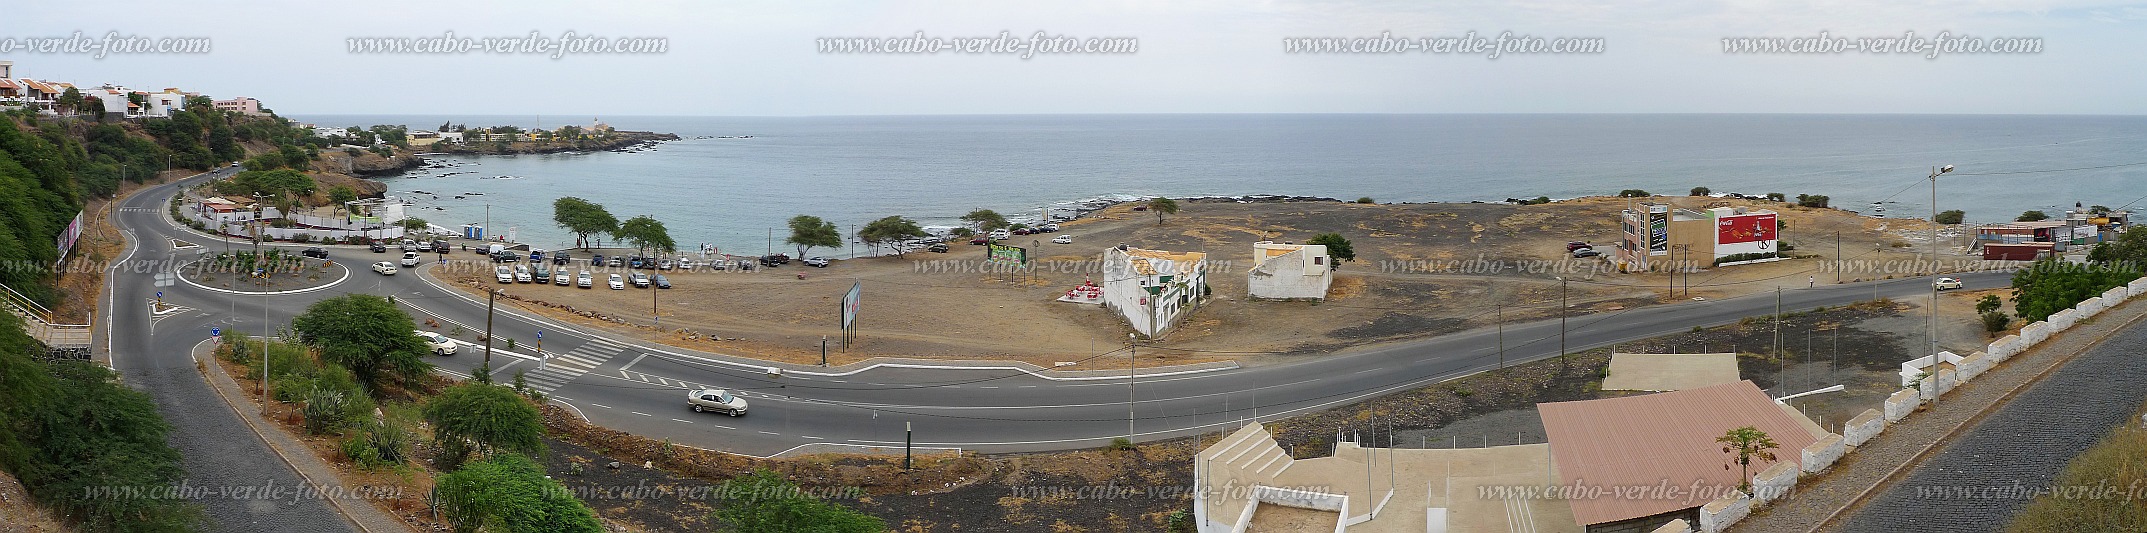 Santiago : Praia Quebra Canela : estradas e rotunda : Landscape TownCabo Verde Foto Gallery